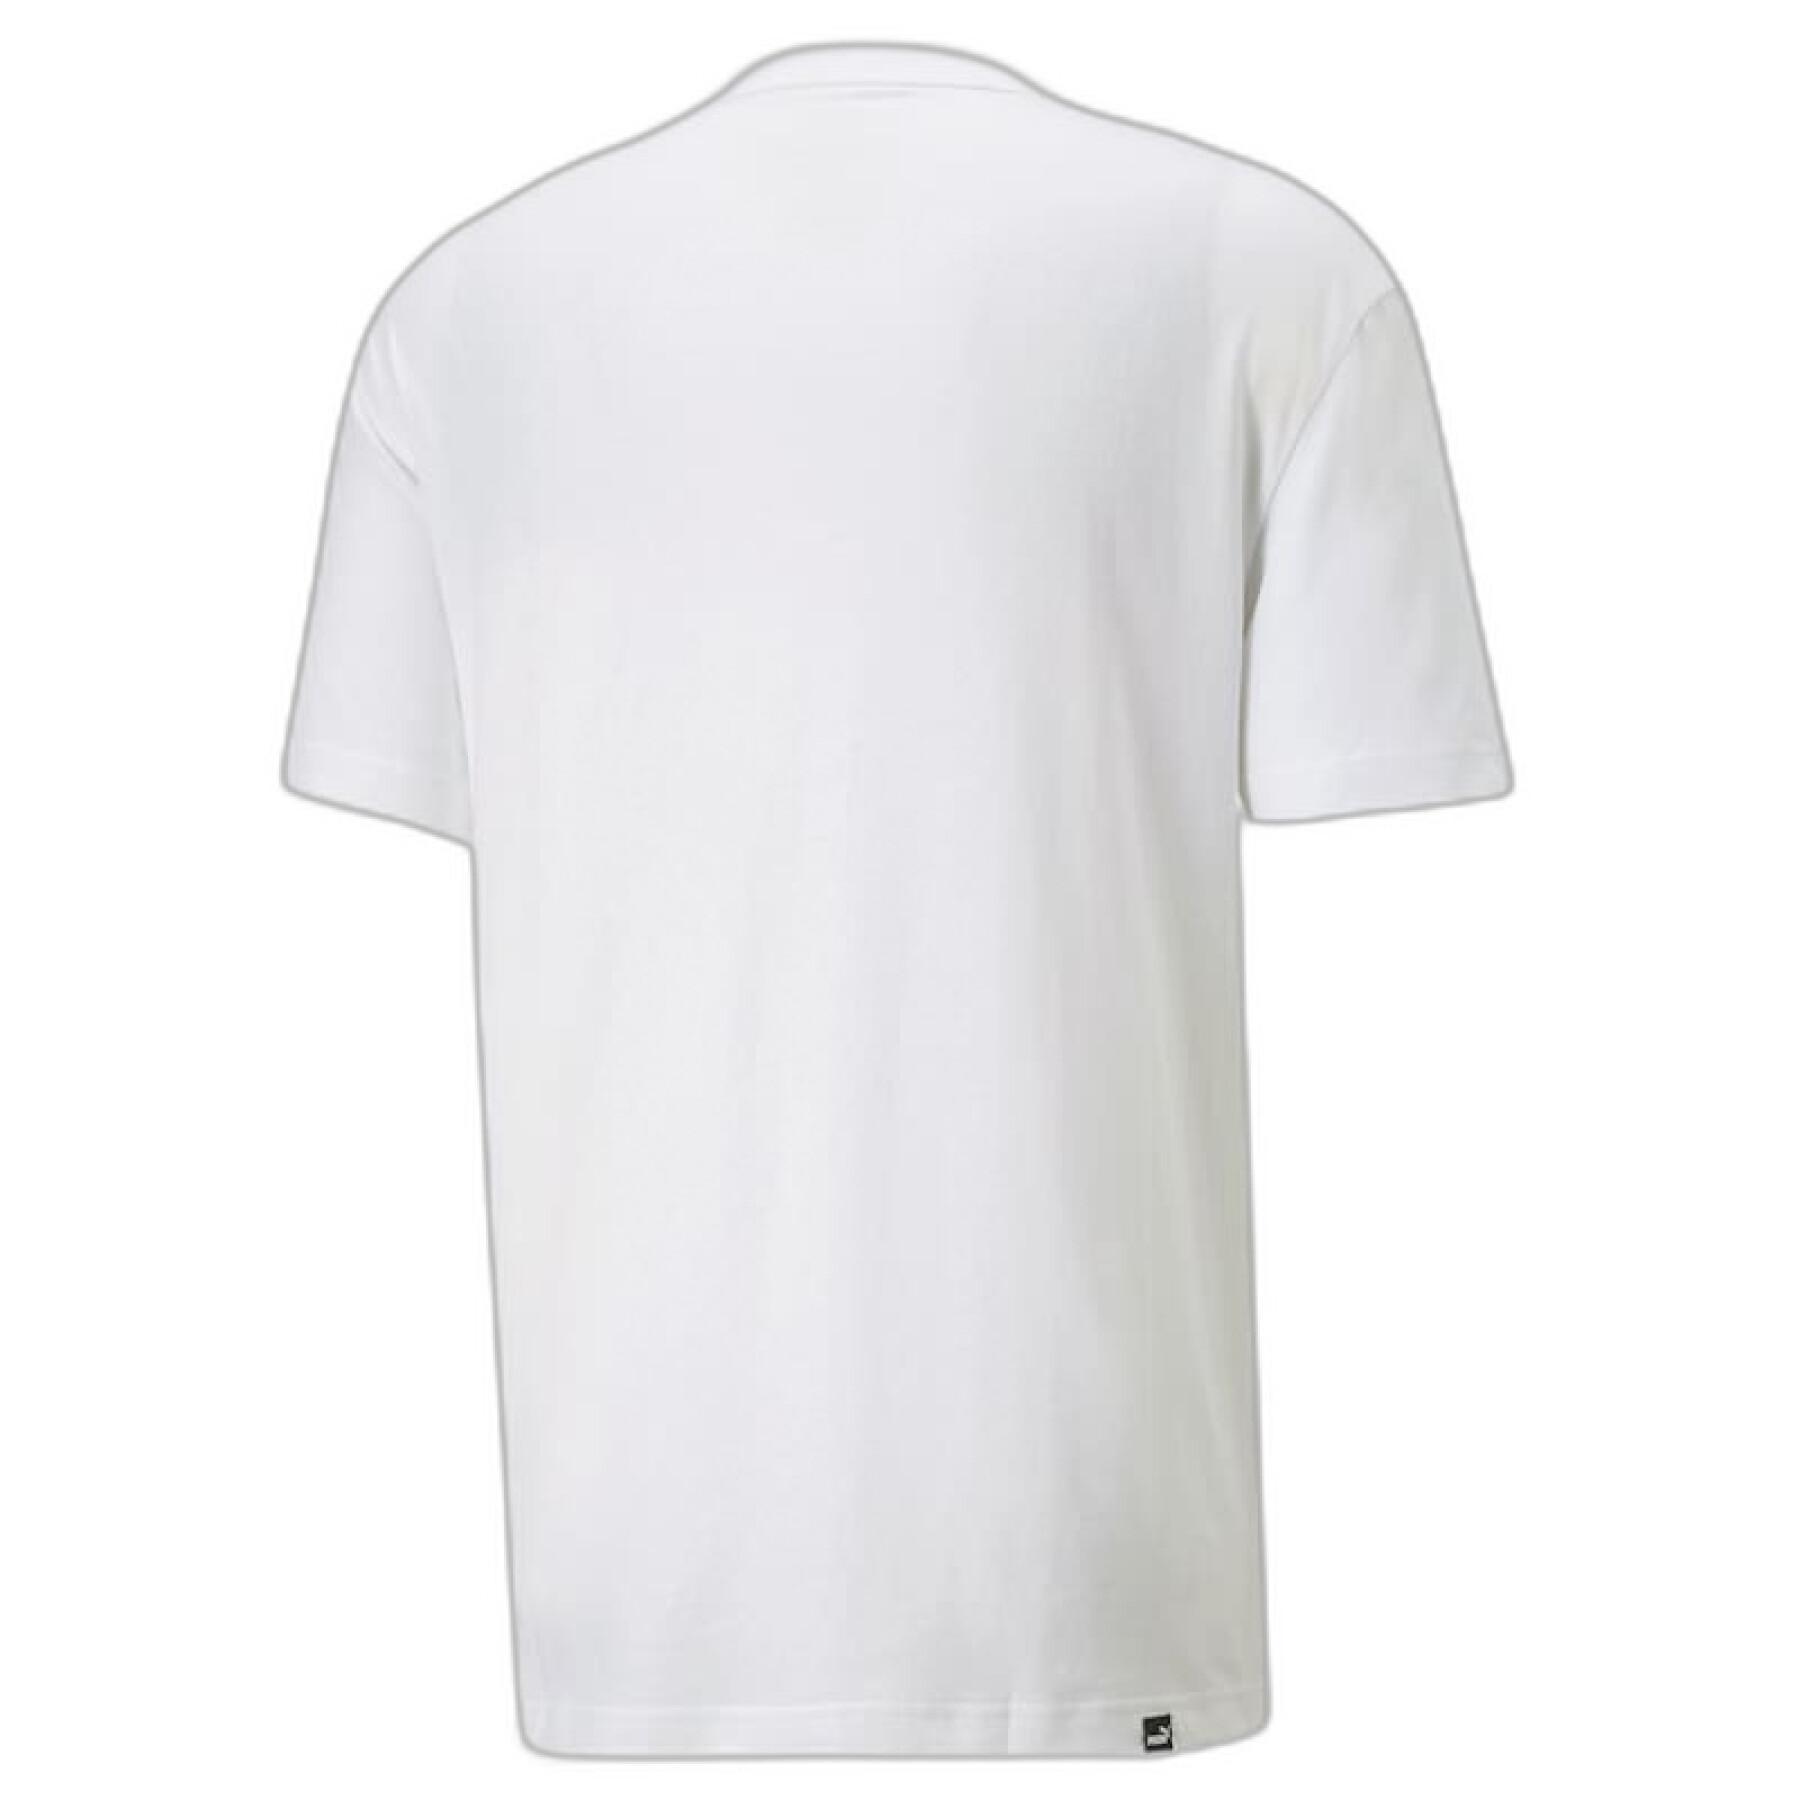 T-shirt with pocket Puma Rad/Cal